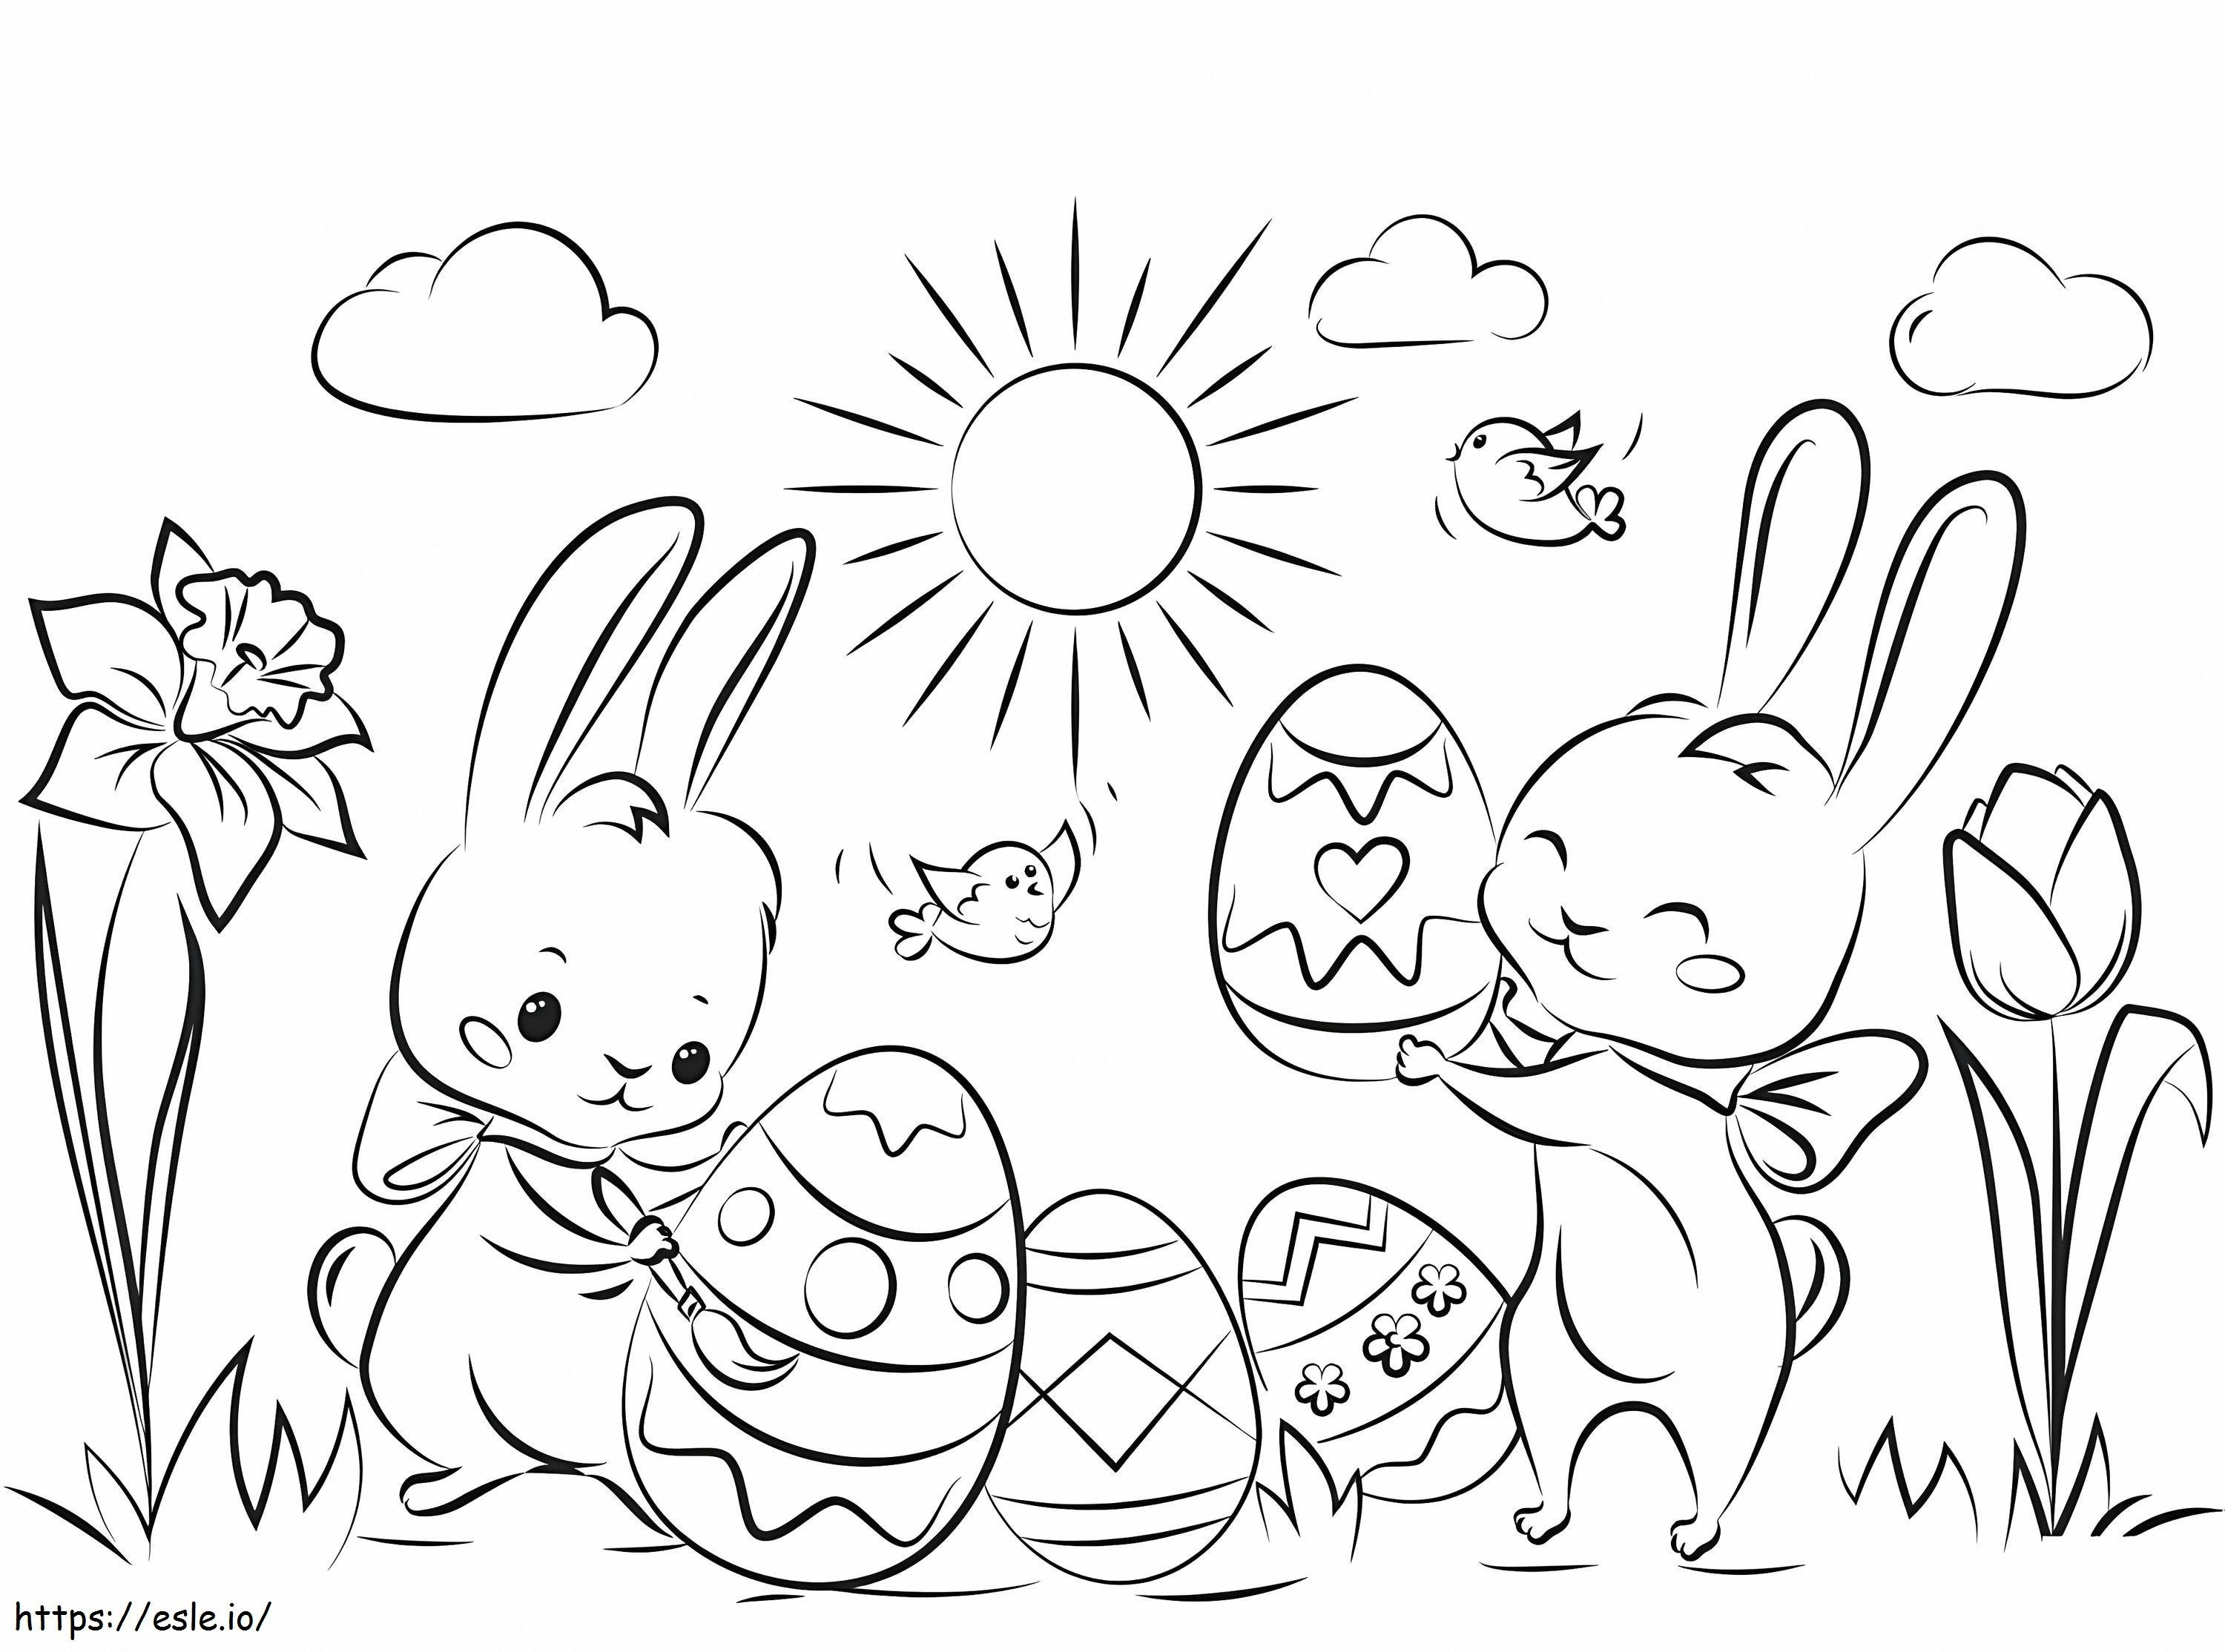 Conejos de Pascua para colorear